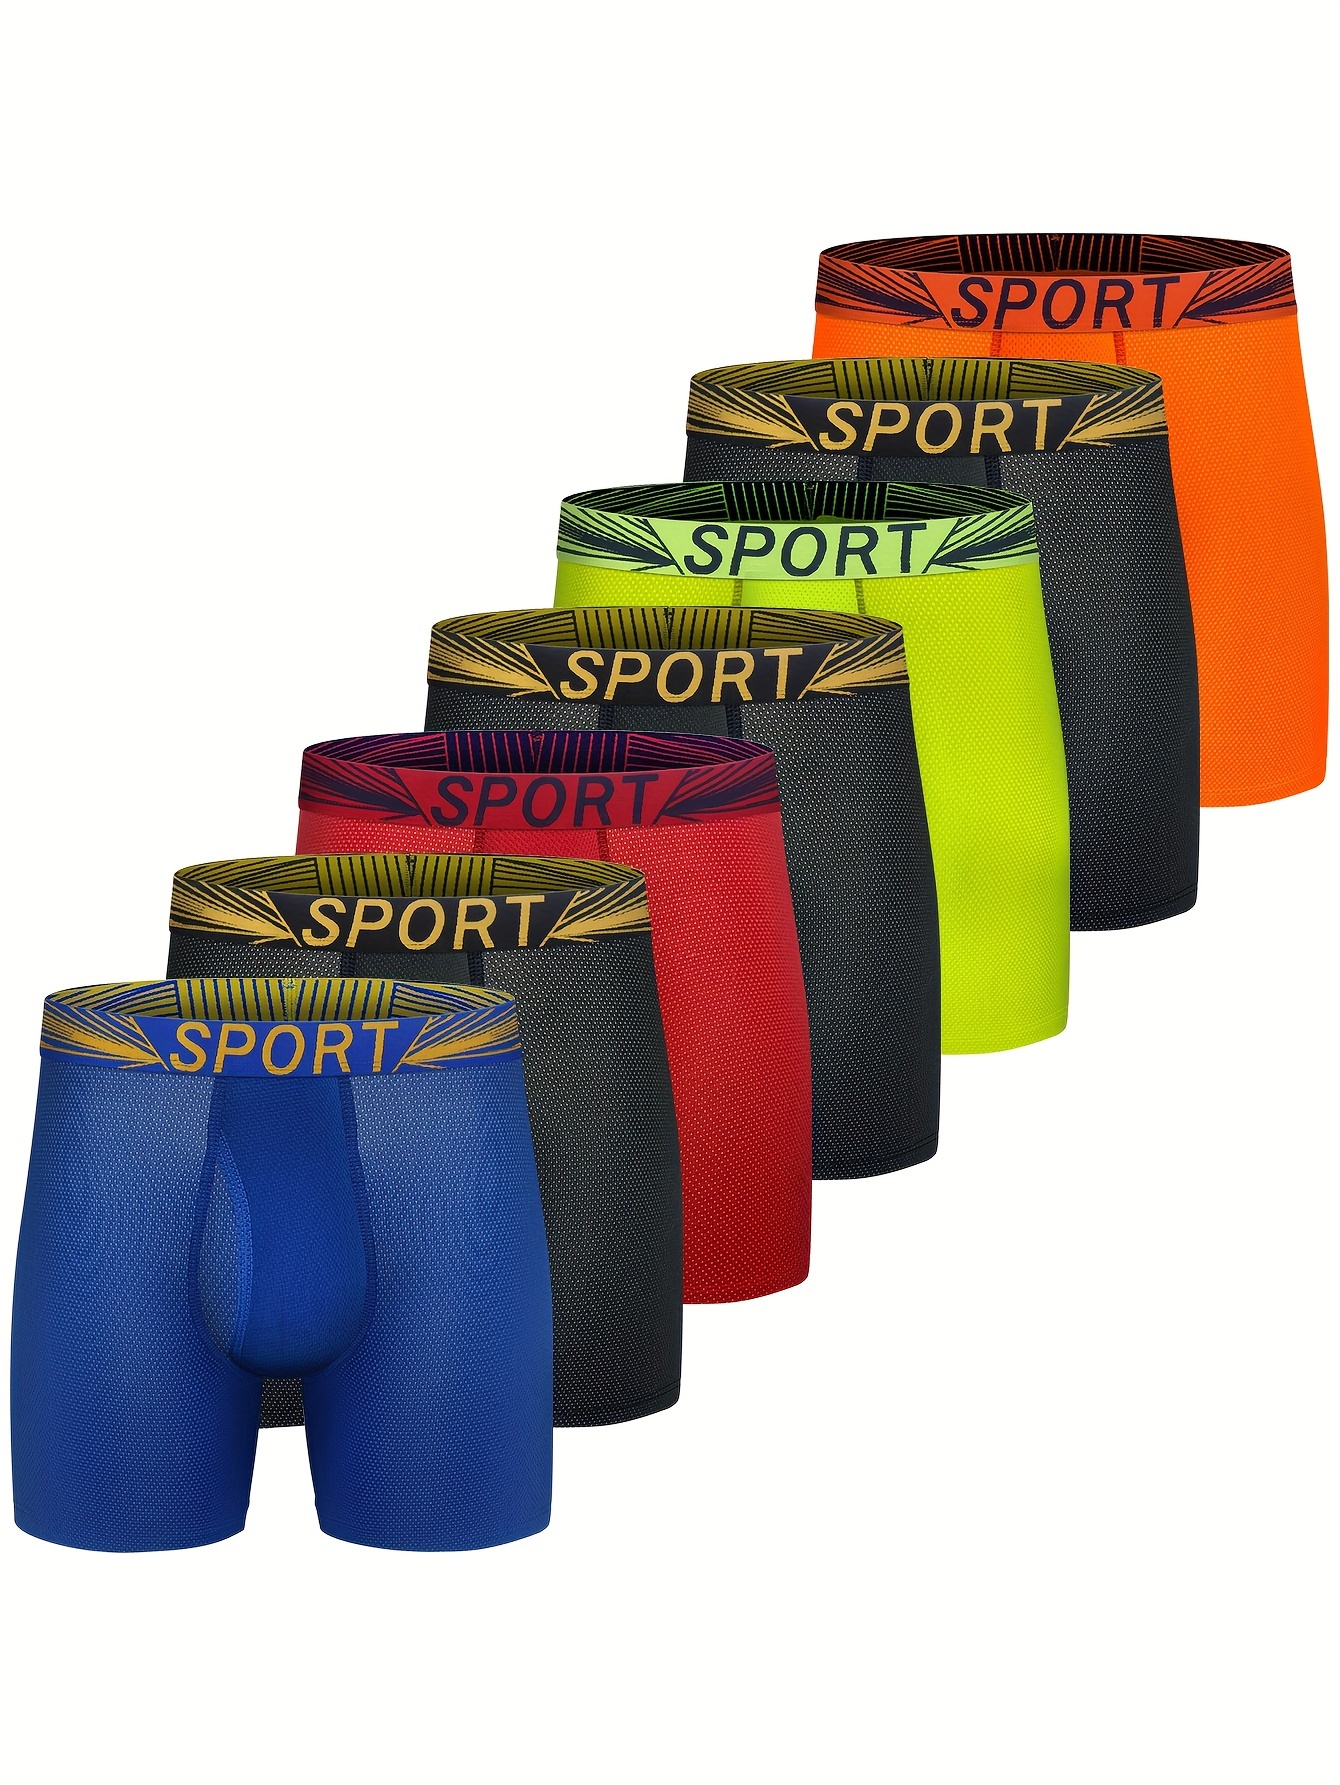 Men's Trendy Long Boxer Briefs Long Leg Underwear Comfort Flex Waistband  Undies 